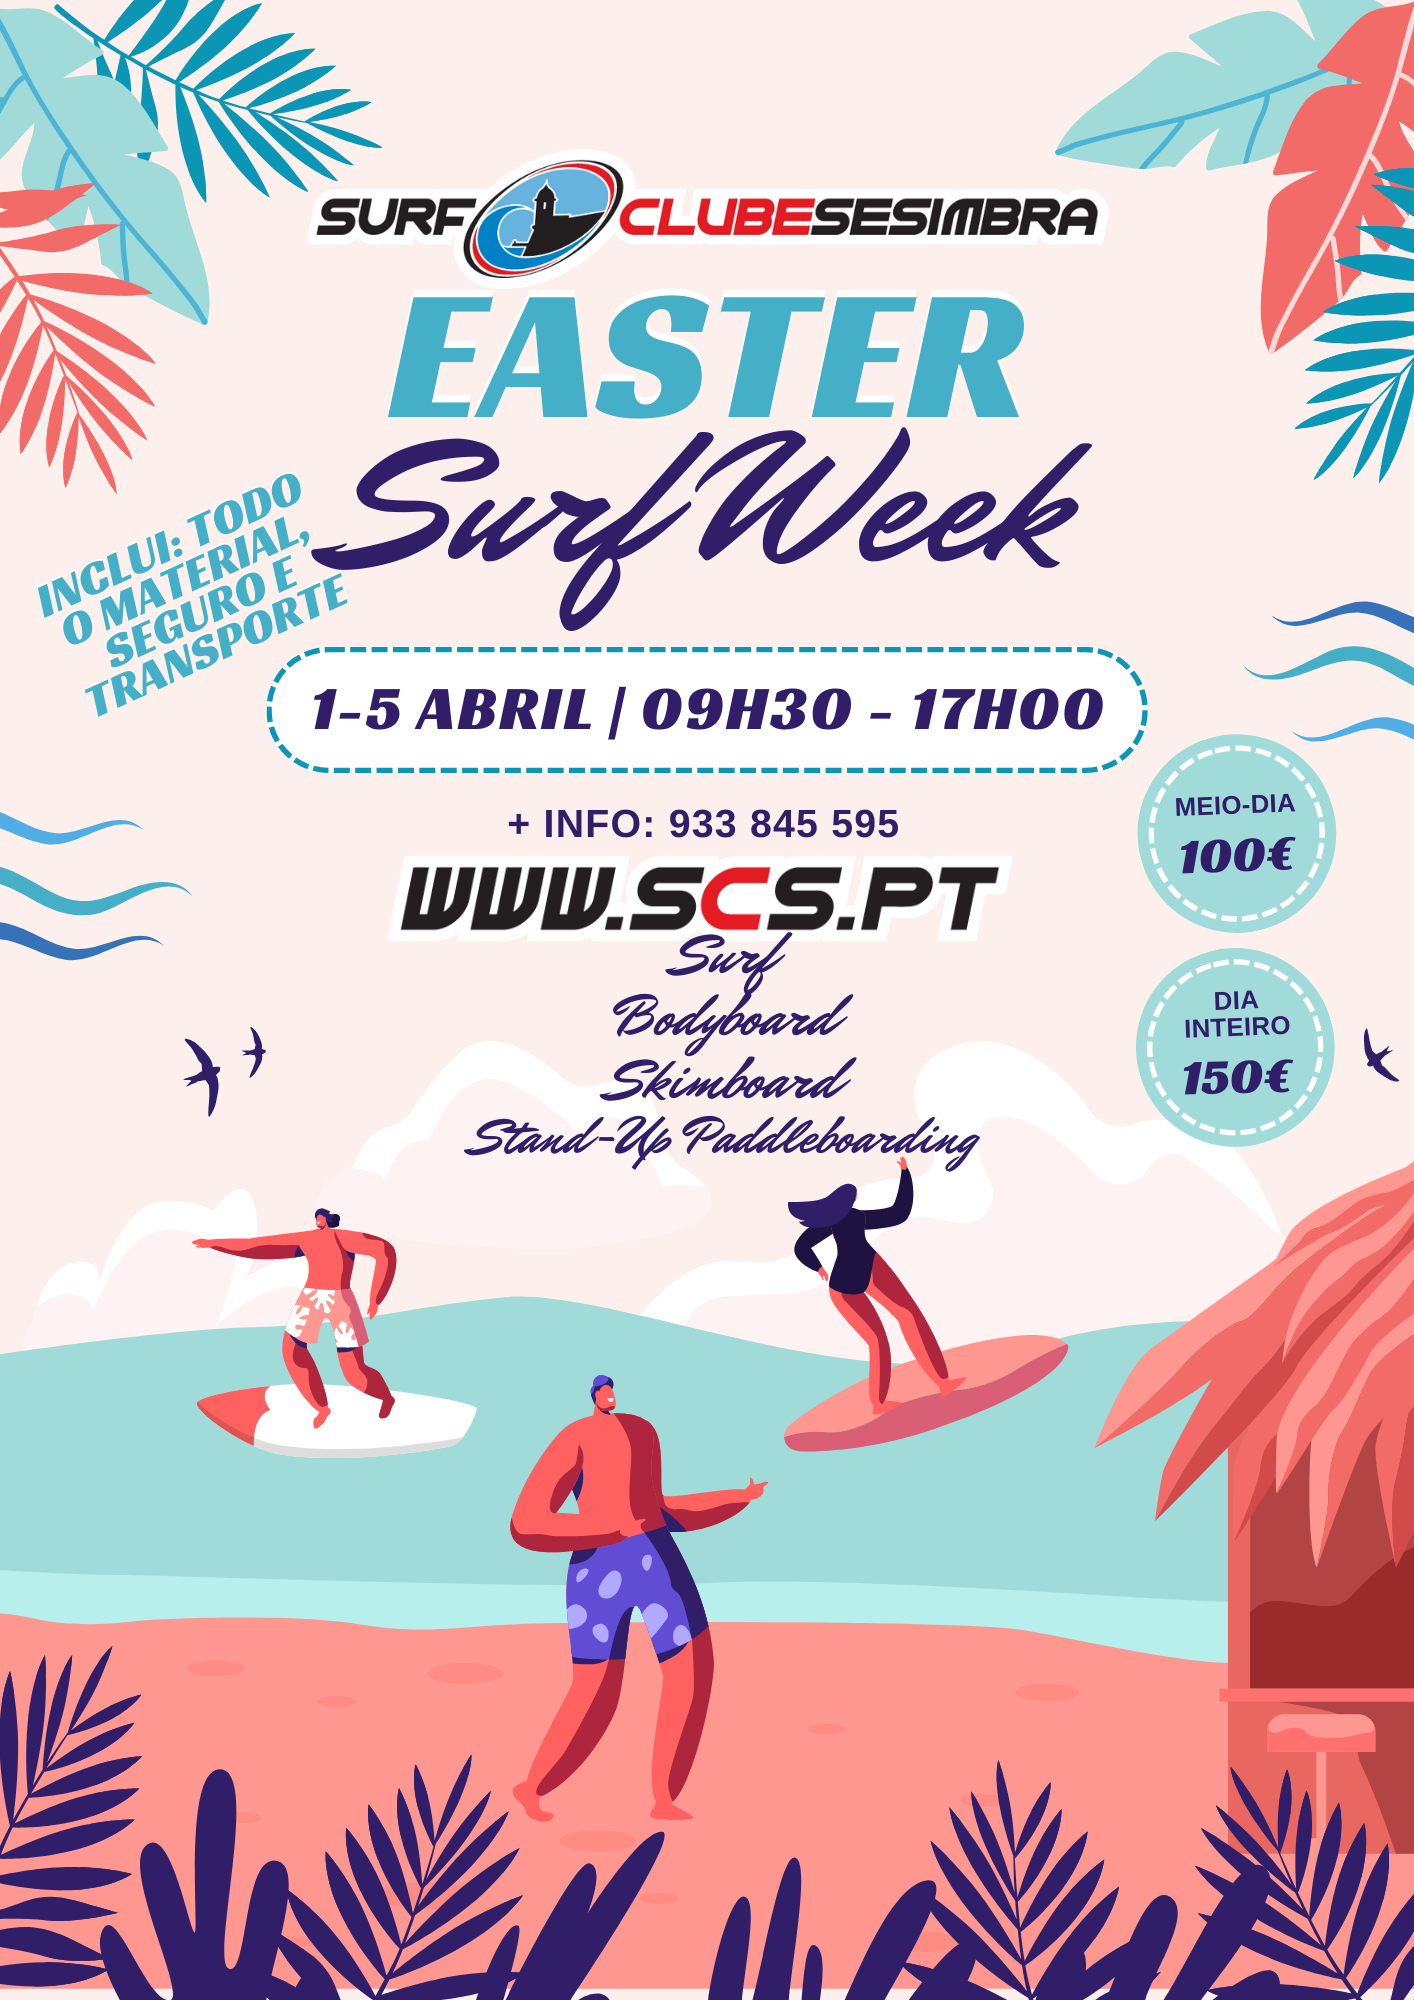 Easter Surf Week - 1 a 5 de abril